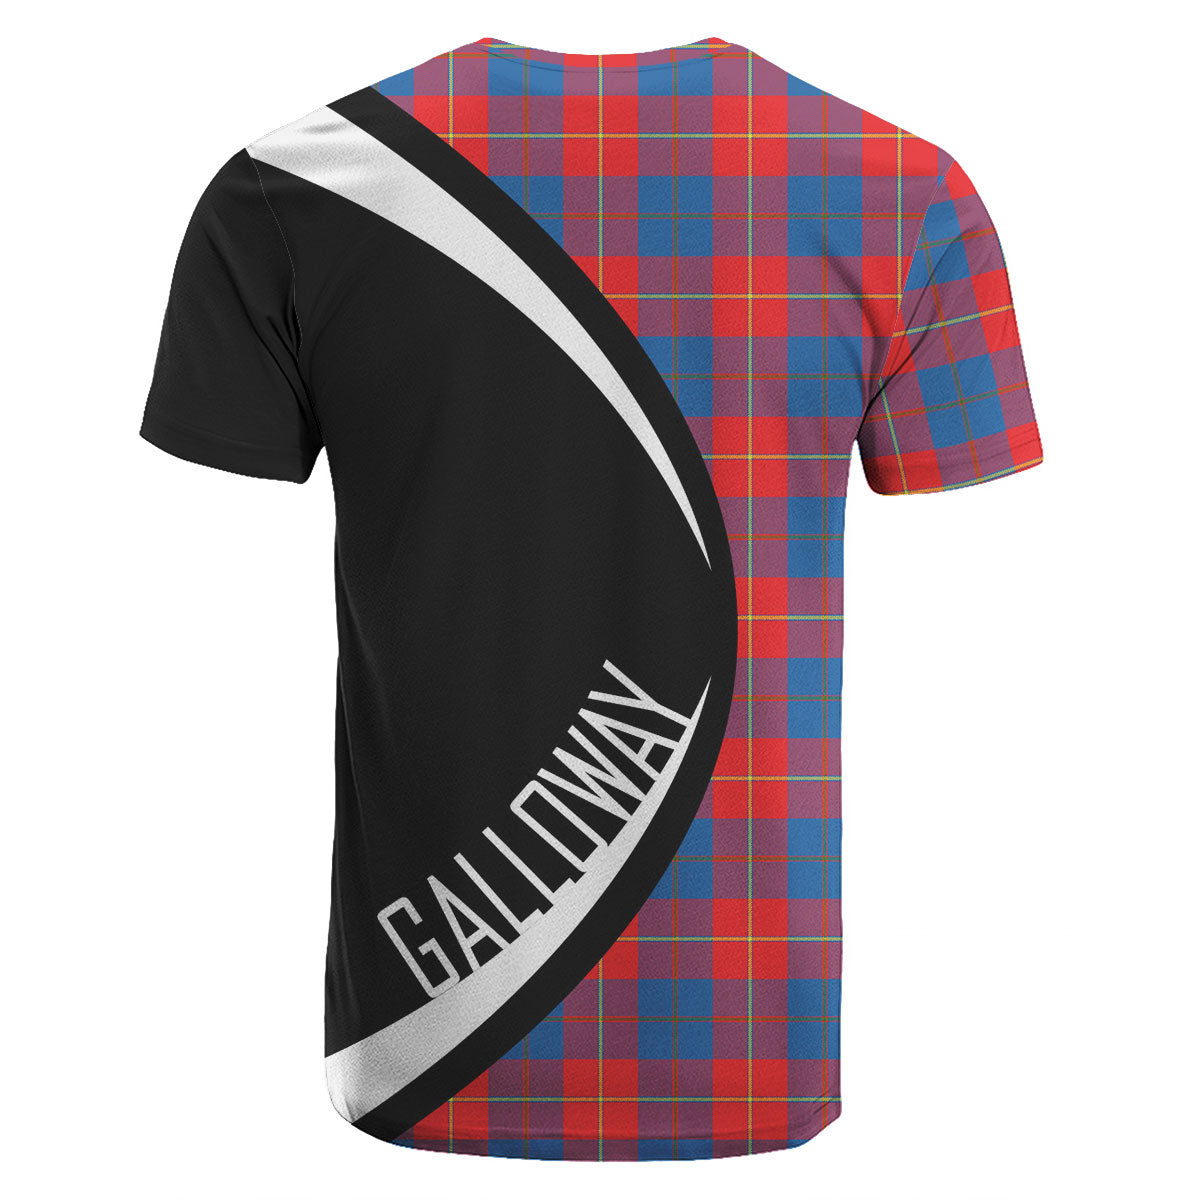 Galloway Red Tartan Crest T-shirt - Circle Style